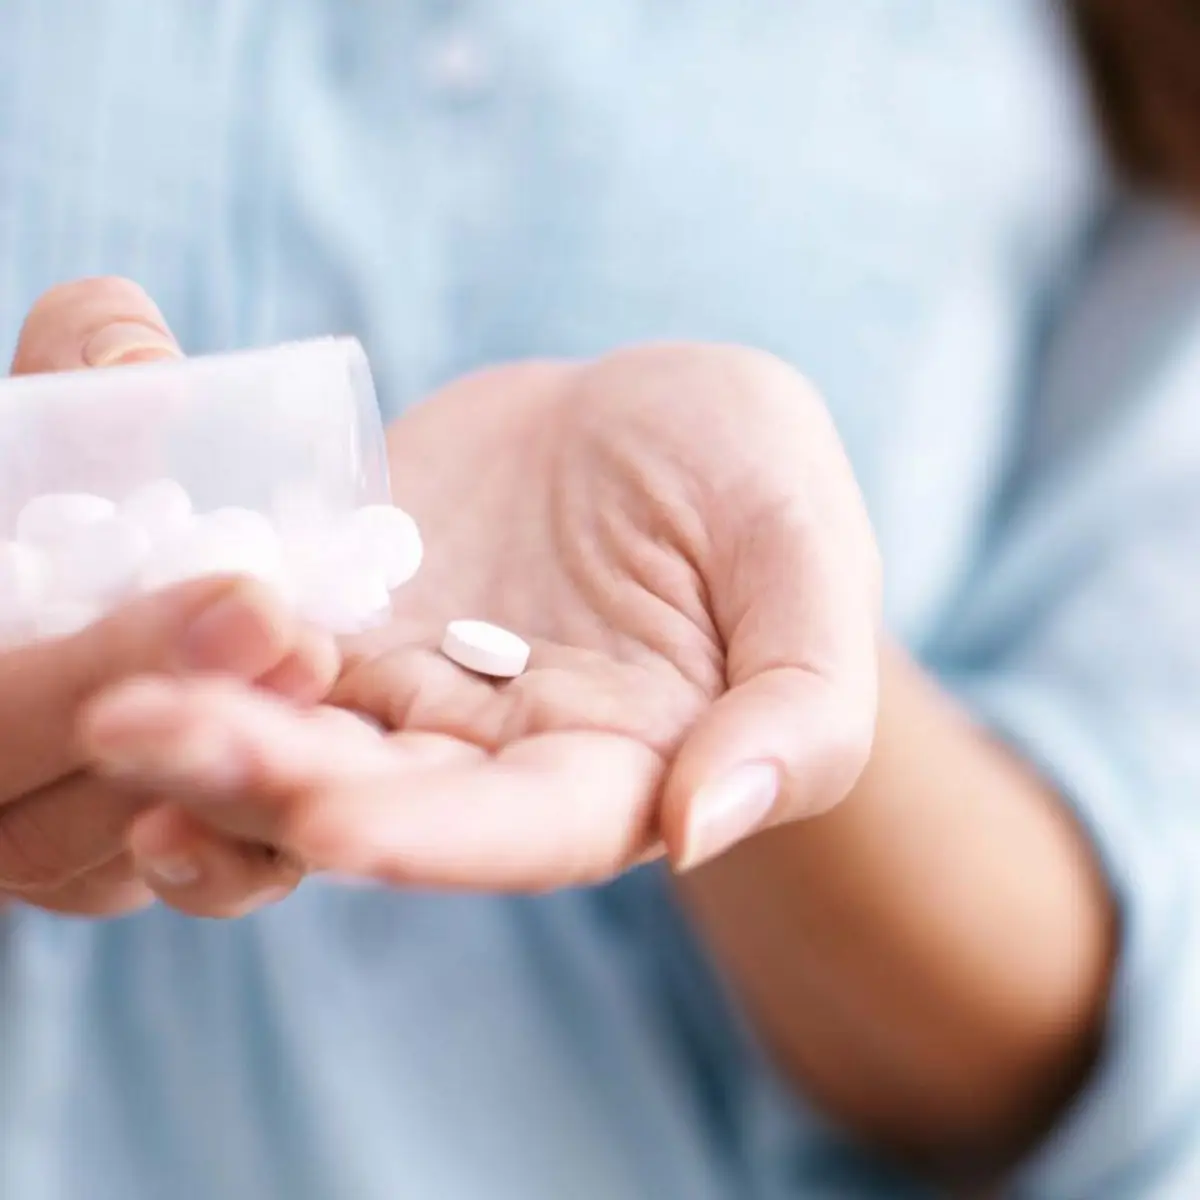 kann man betrunken aspirin nehmen frau haelt im hand eine tablette aspirin